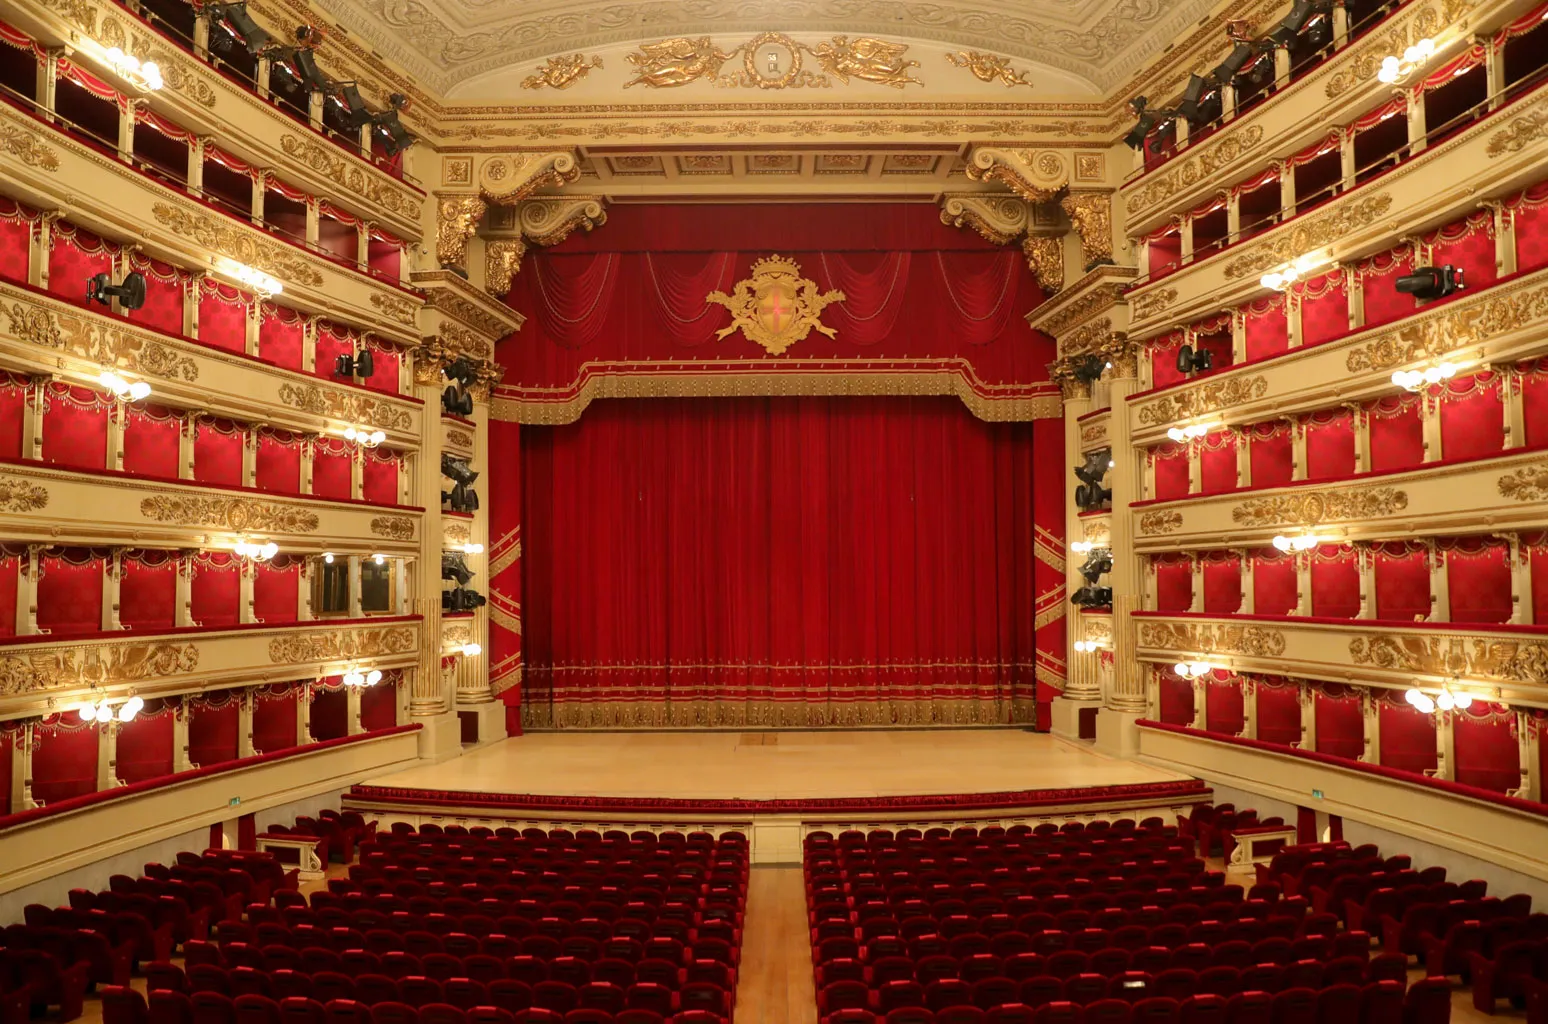 La Scala Opera House in Milan, Italy